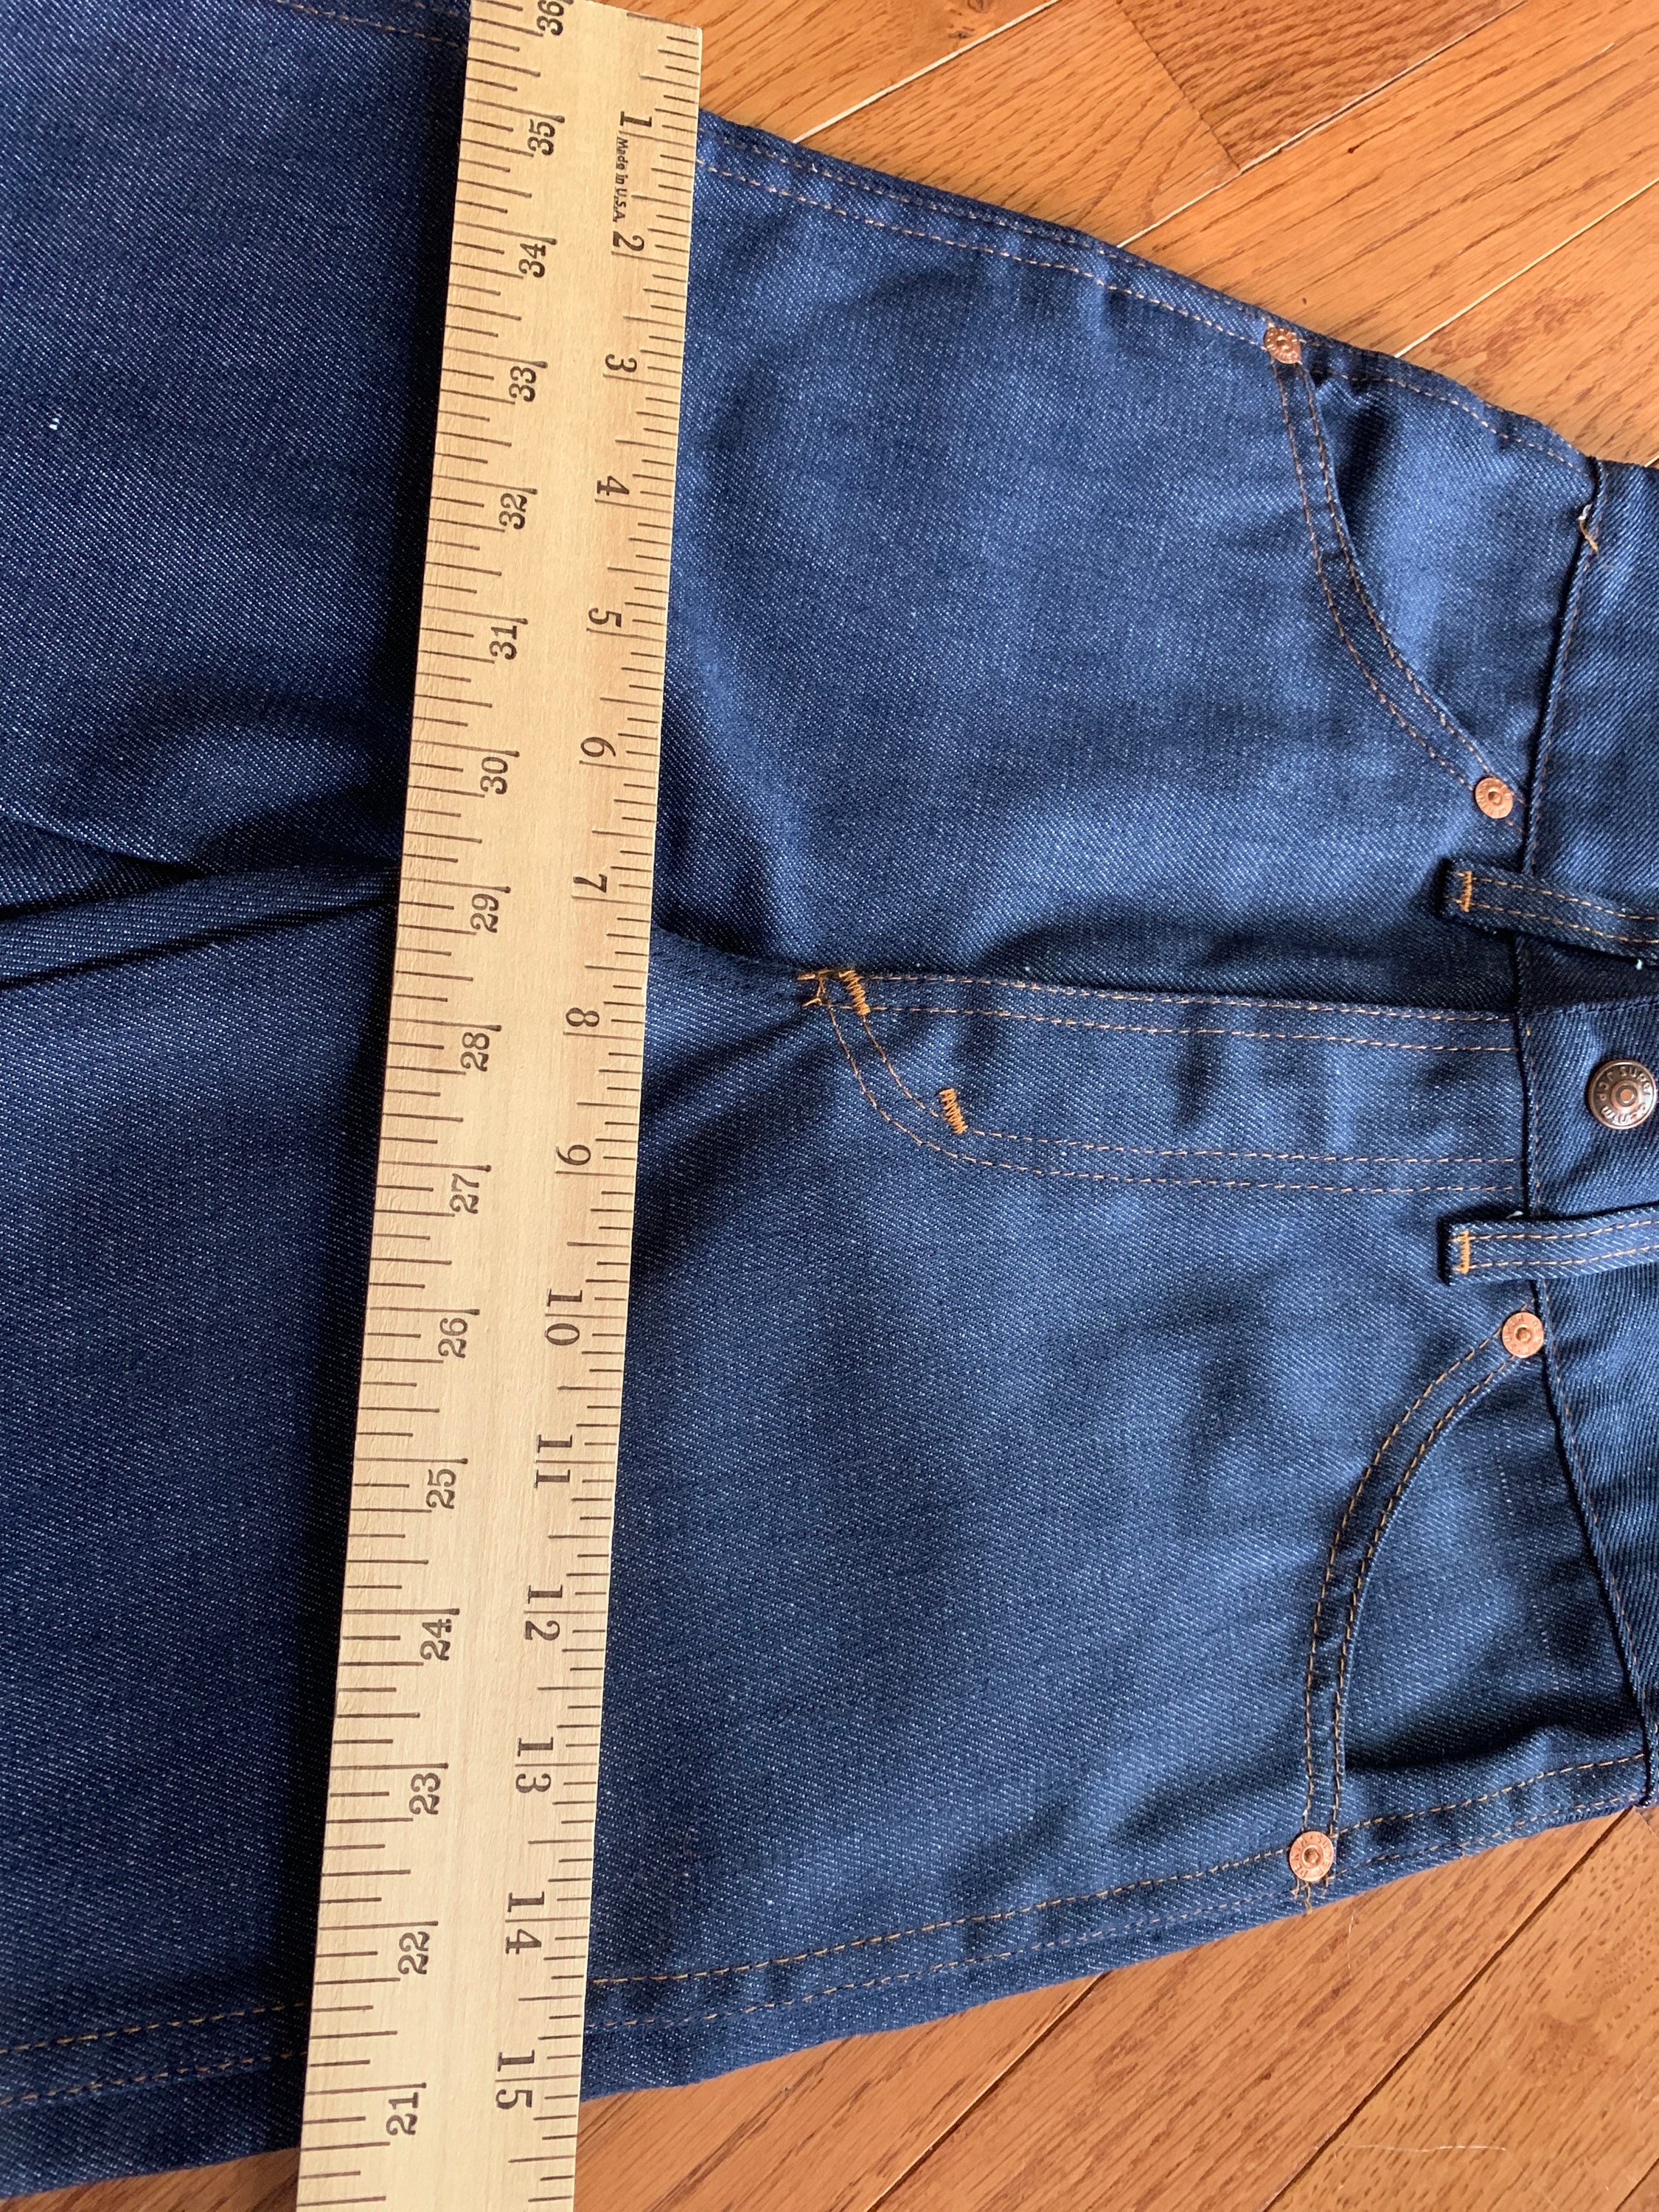 Vintage Boys Super Denim JC Penny Jeans / High Waist Retro | Etsy